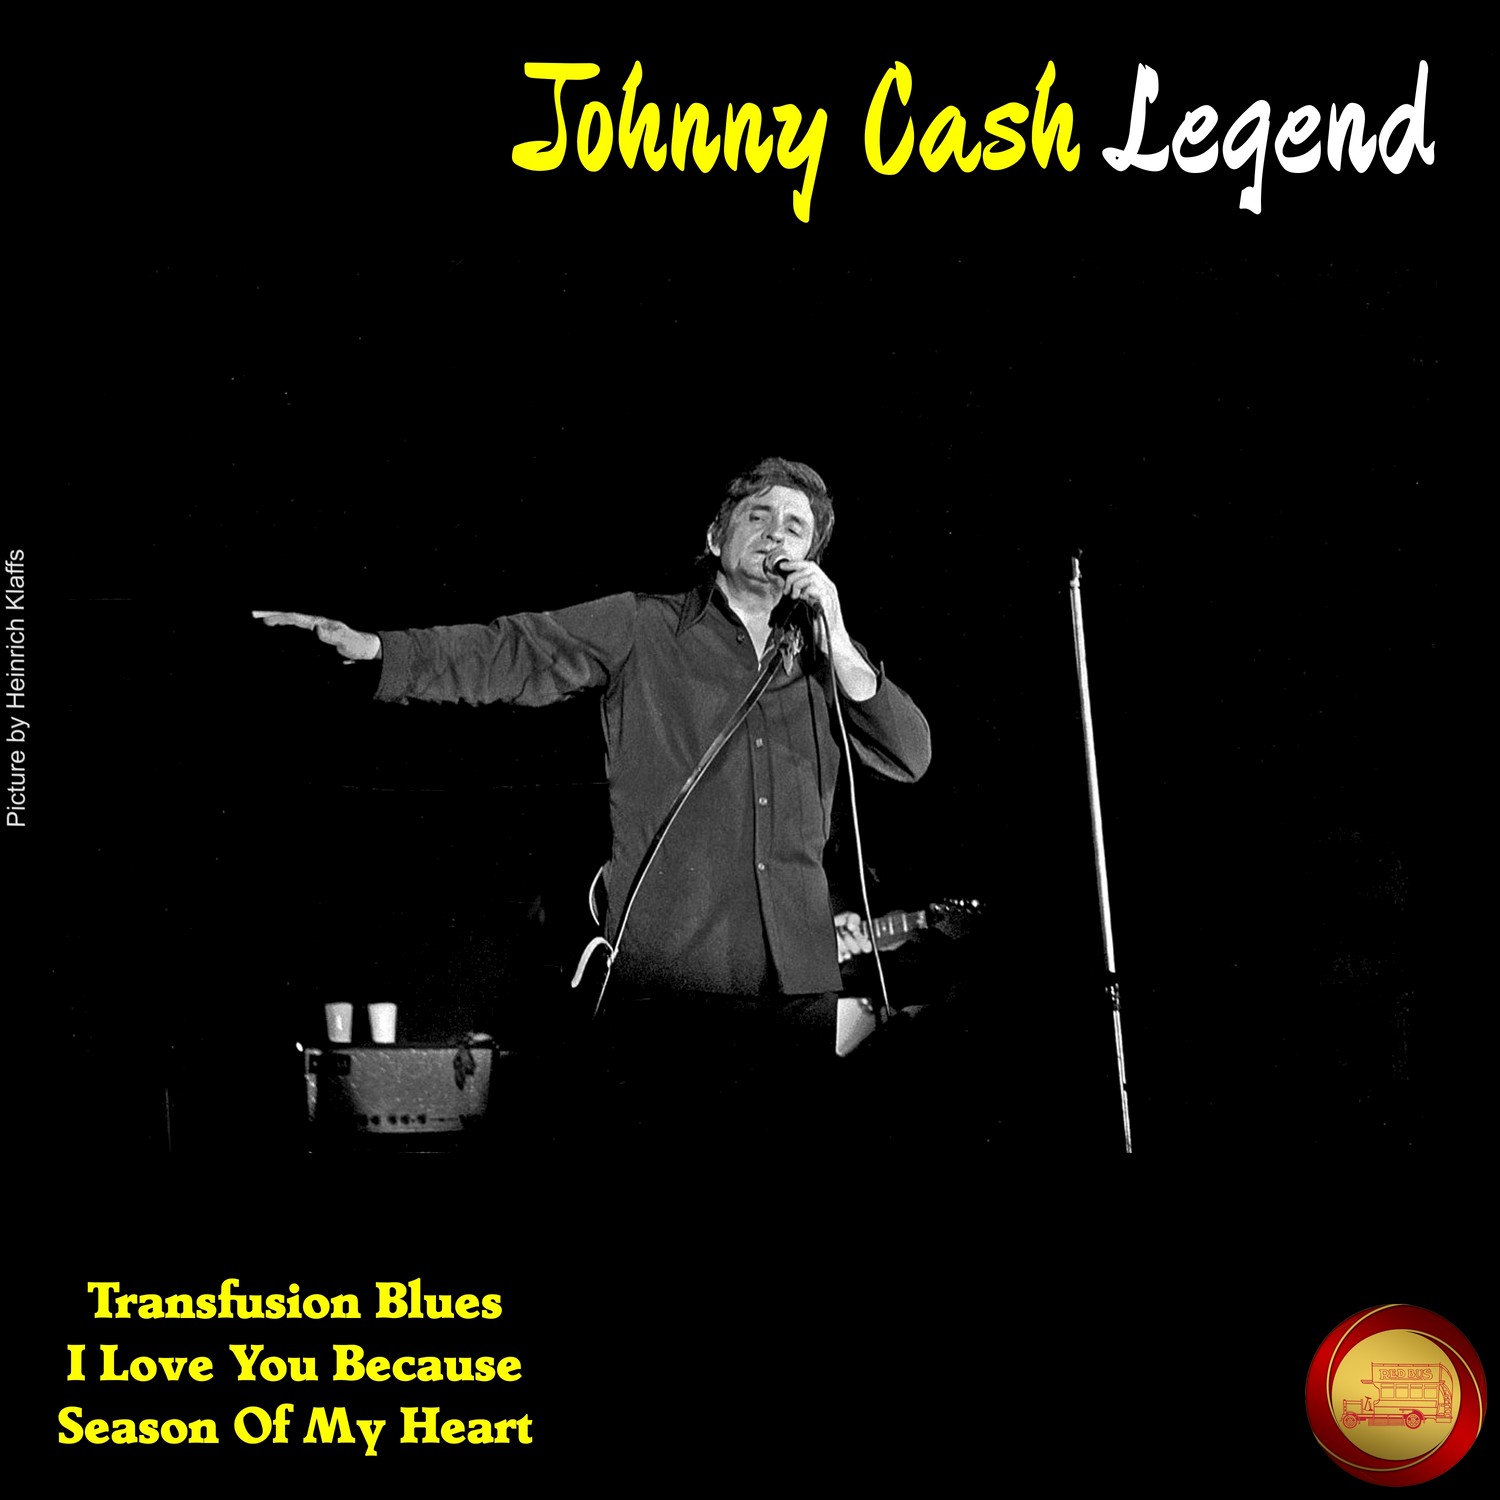 Johnny Cash: Legend